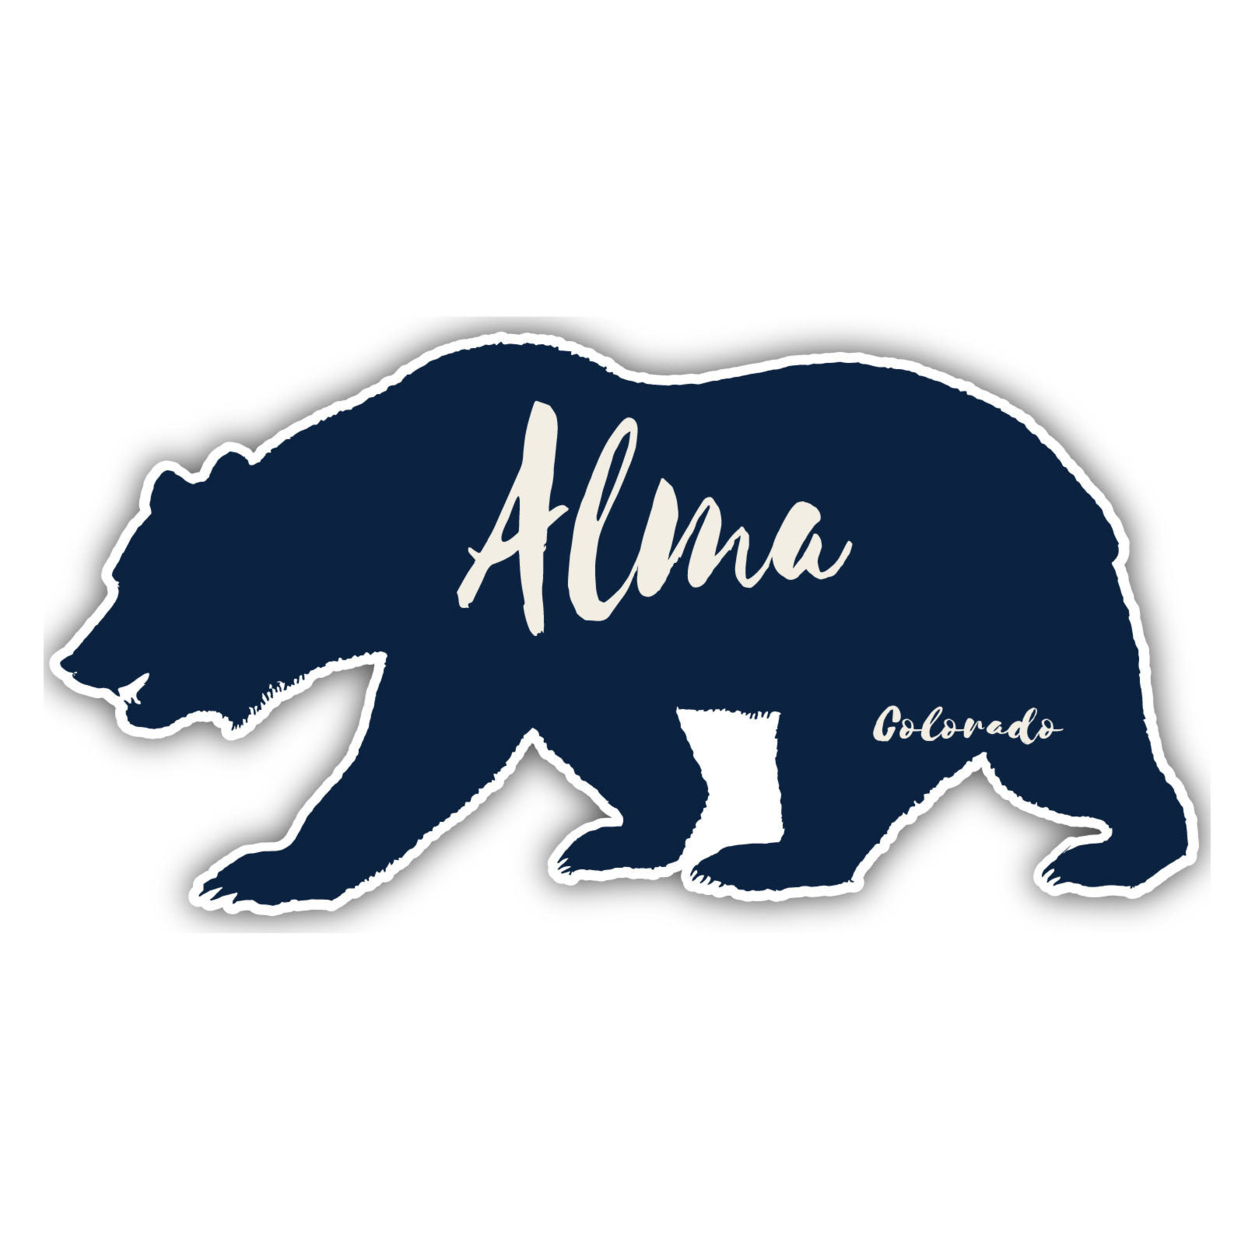 Alma Colorado Souvenir Decorative Stickers (Choose Theme And Size) - 4-Pack, 8-Inch, Adventures Awaits